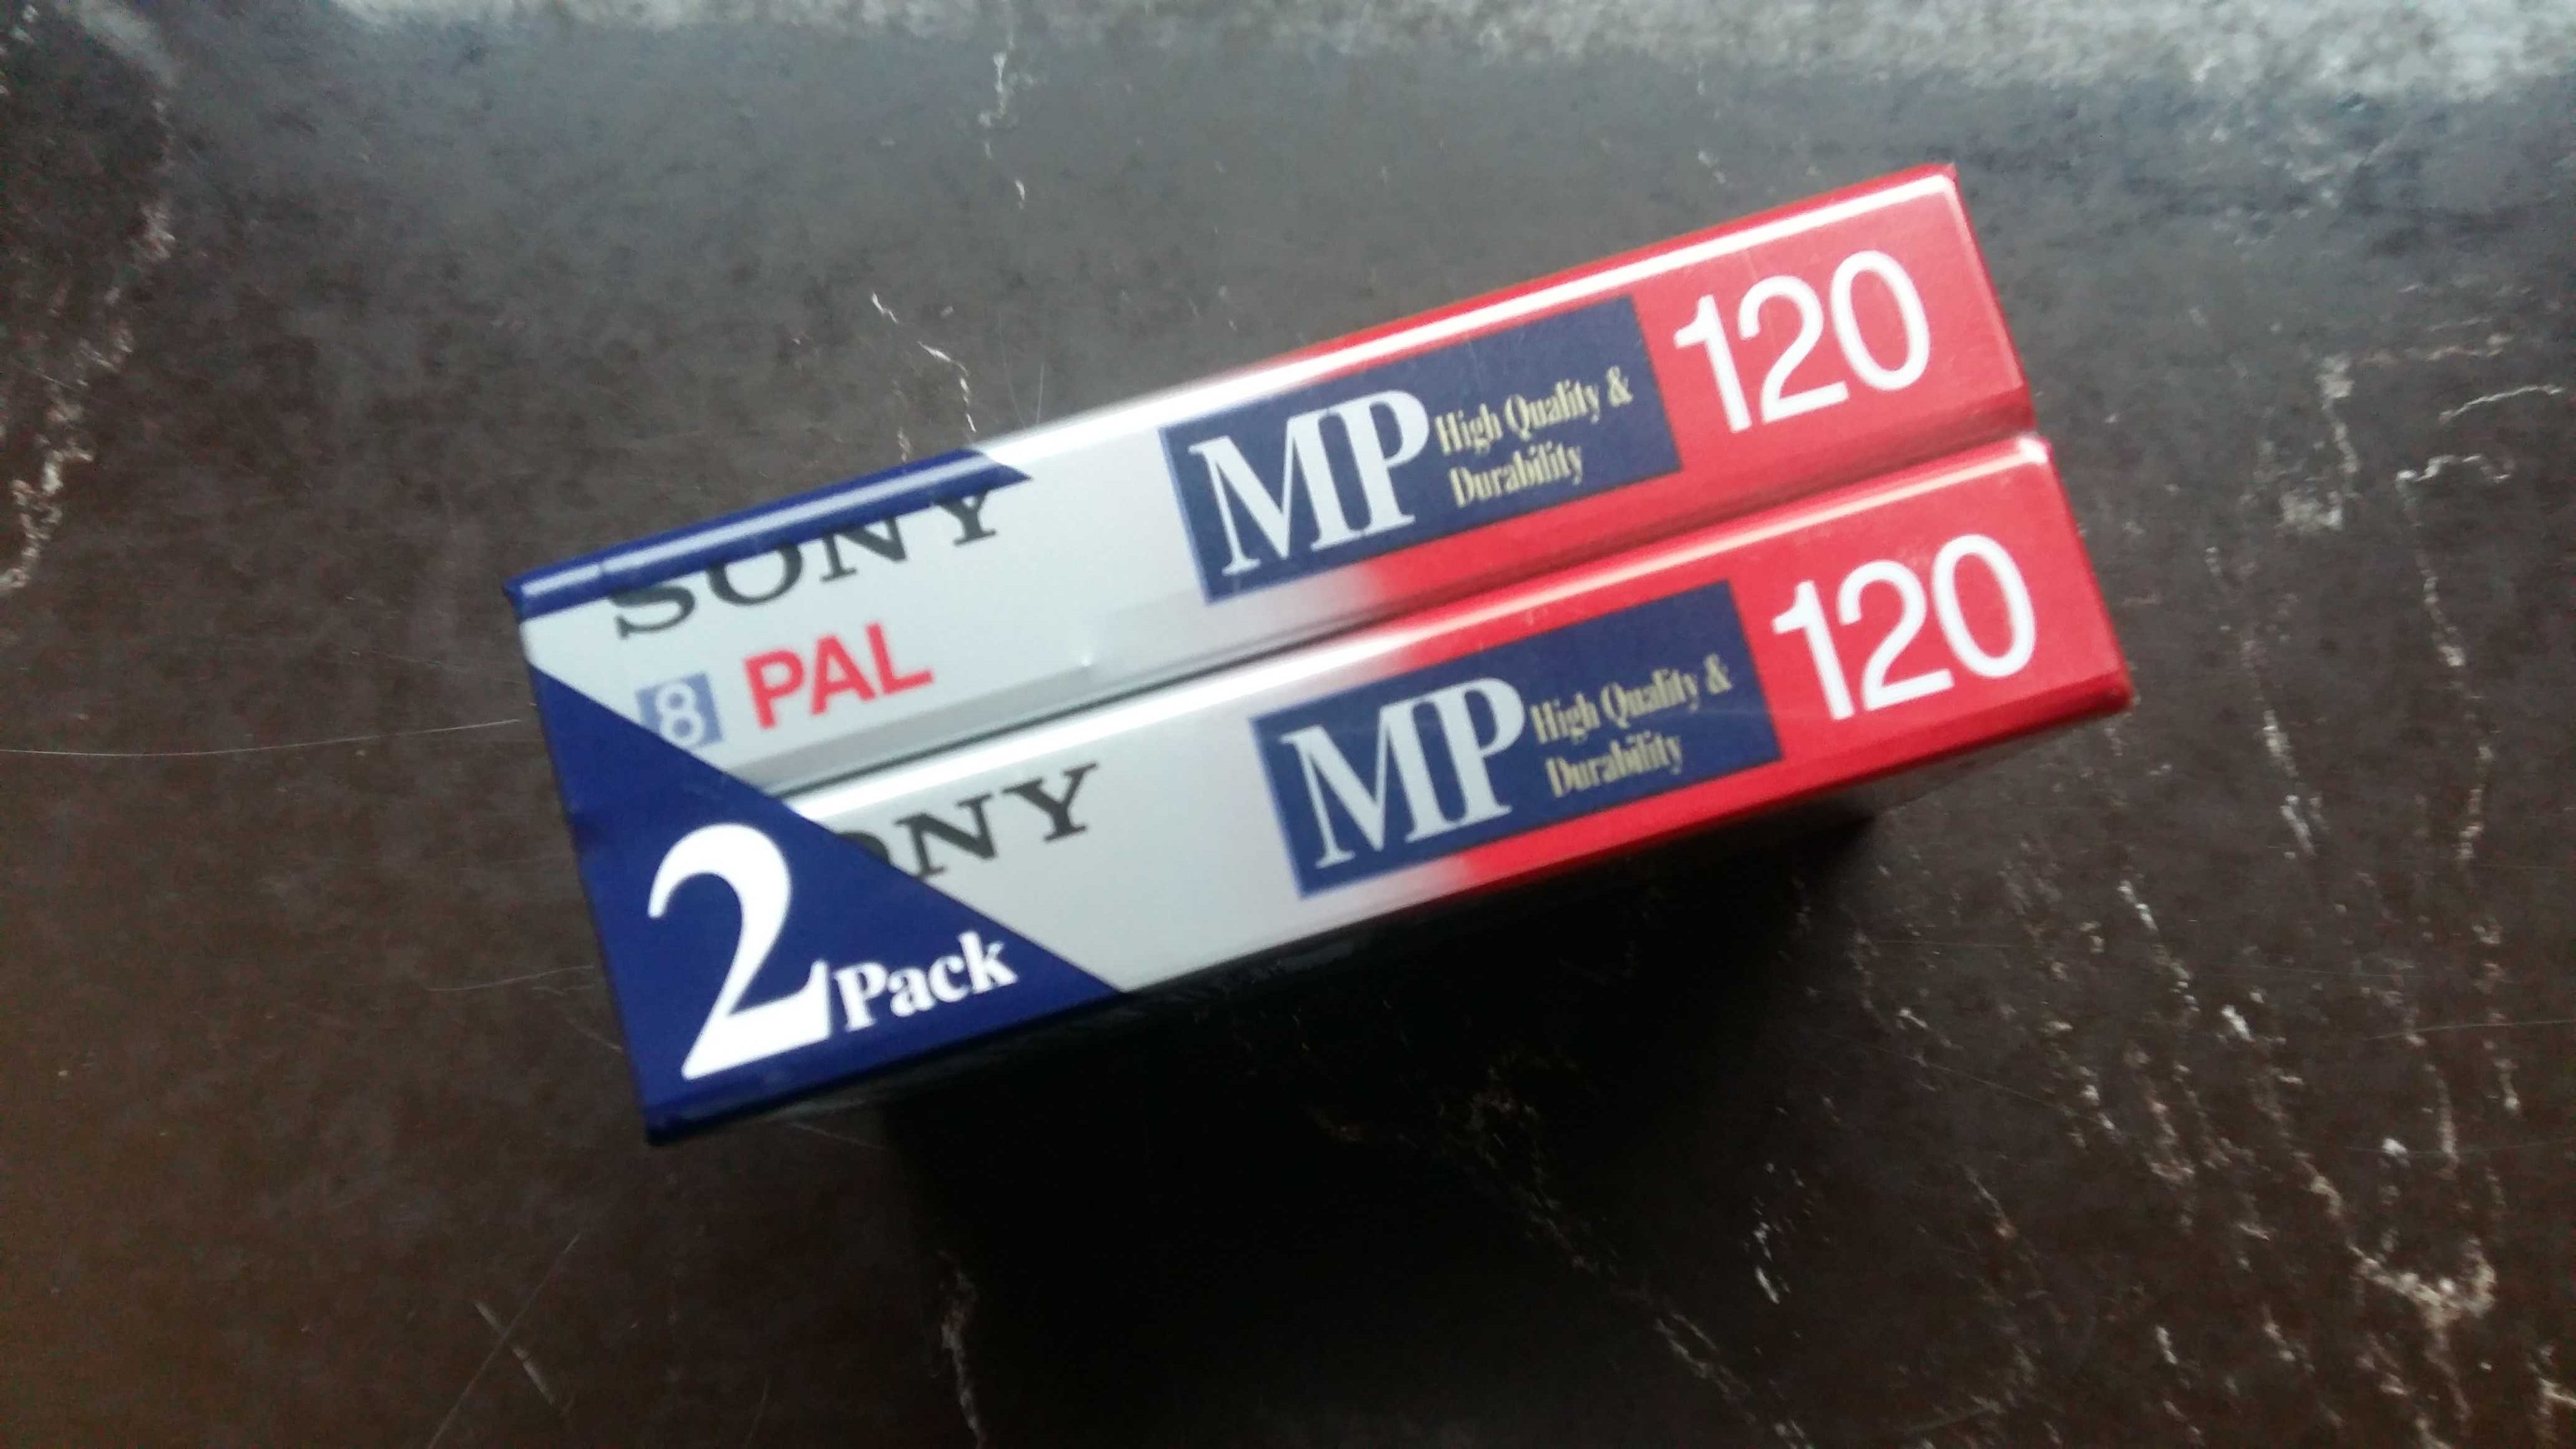 Kaseta video Sony 8MP 120 2-Pak Nowe- Folia, prod. Japonia